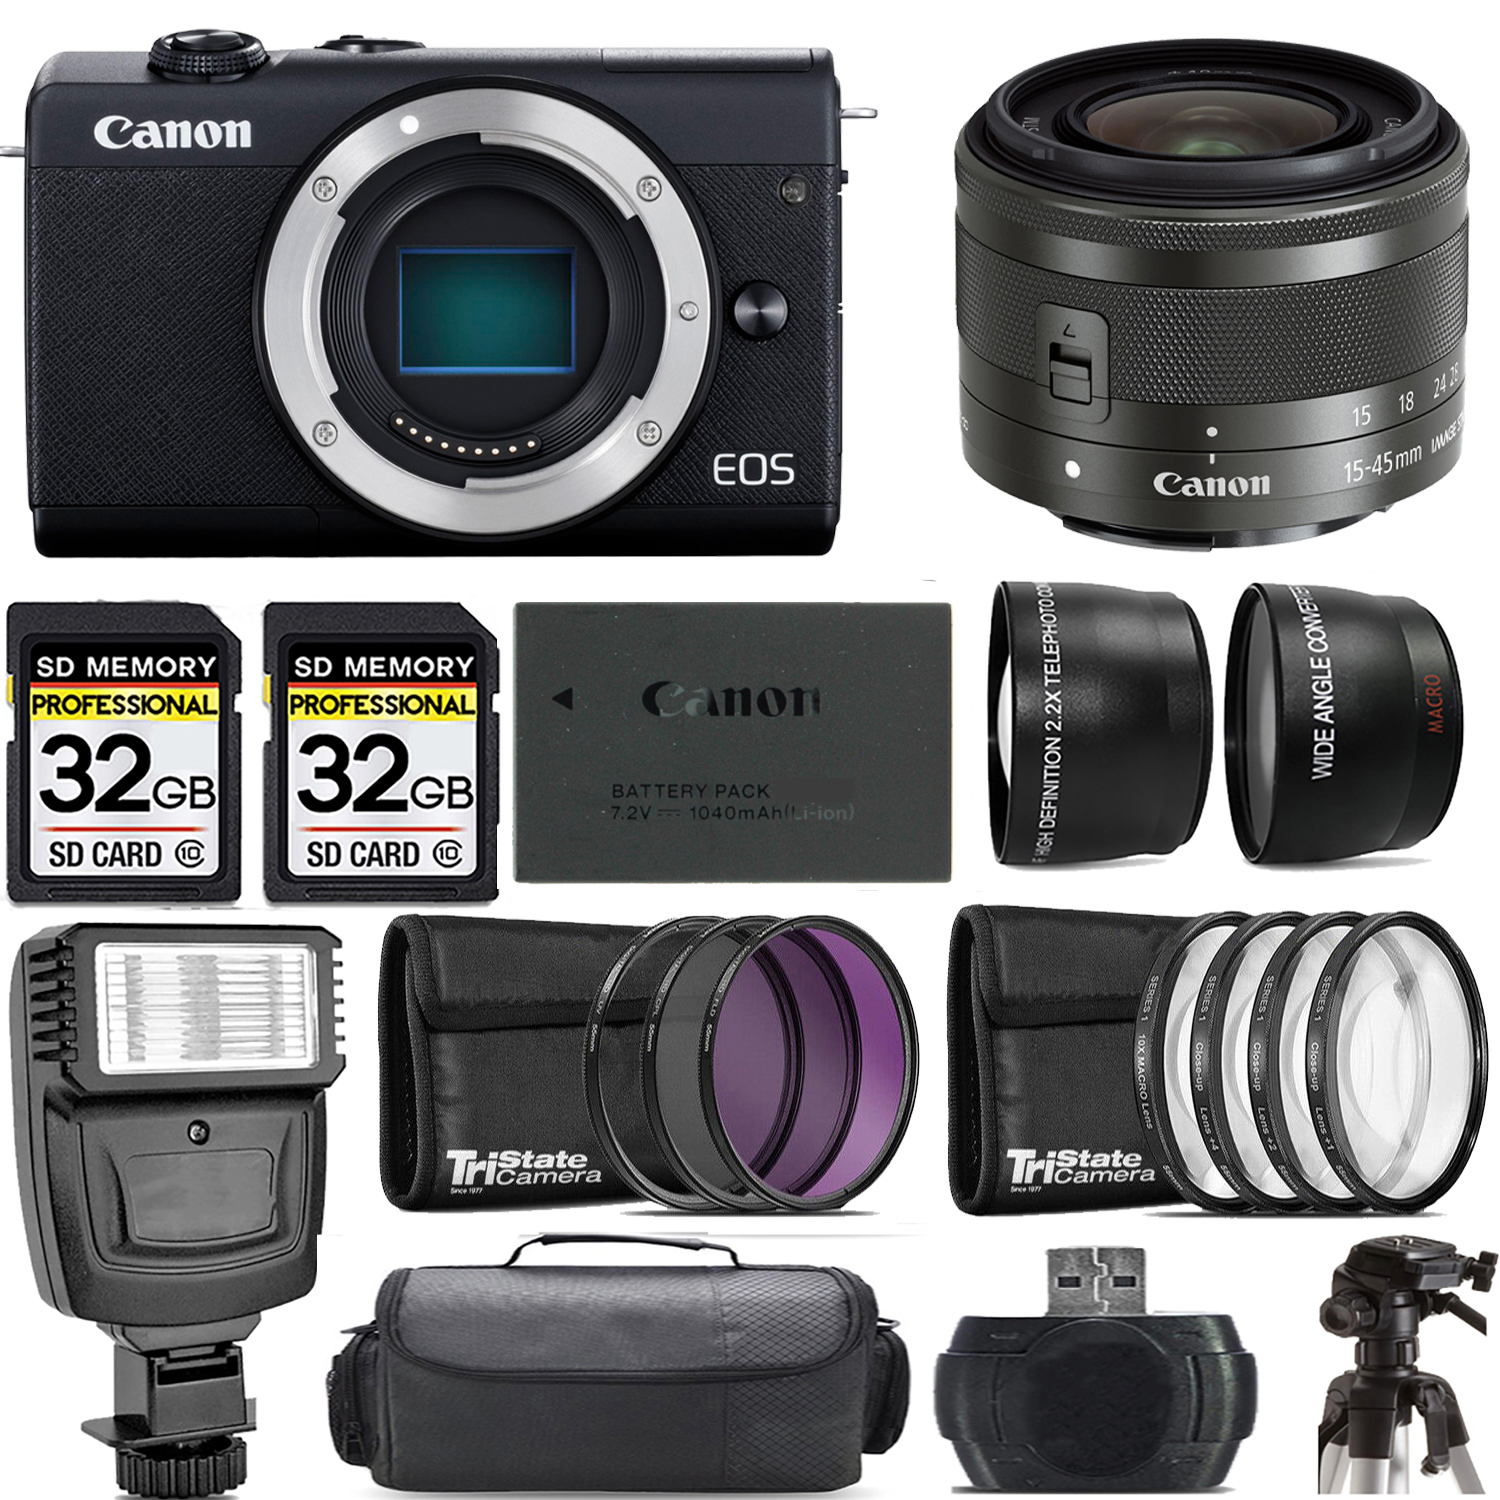 EOS M200  Camera (Black) + 15-45mm IS STM Lens (Graphite) + Flash - Kit *FREE SHIPPING*